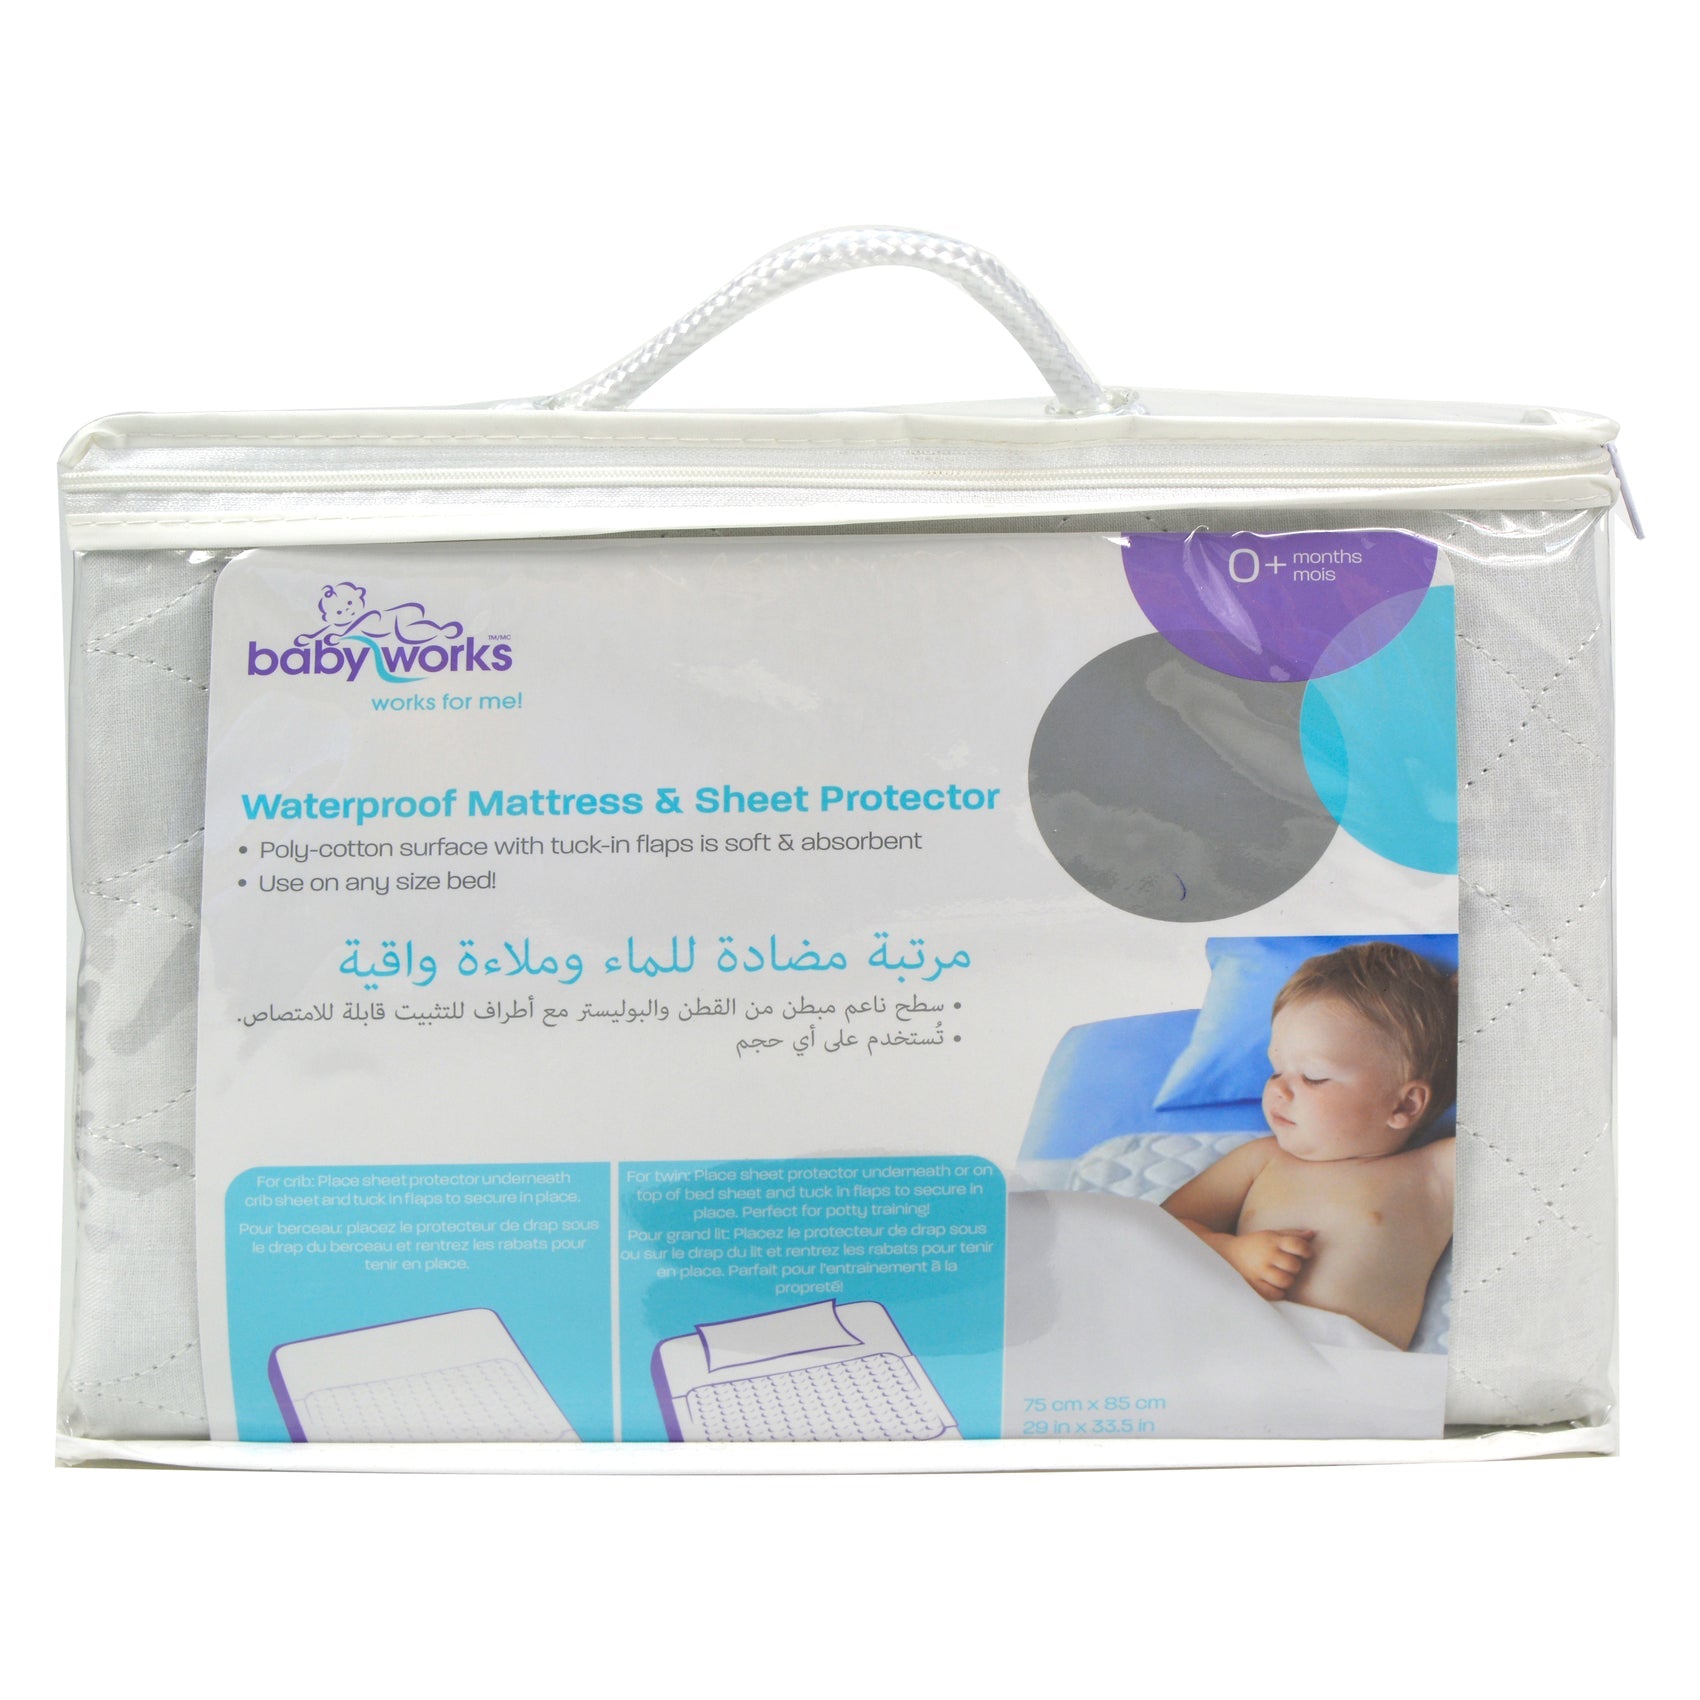 Baby Works - Waterproof Mattress & Sheet Protector